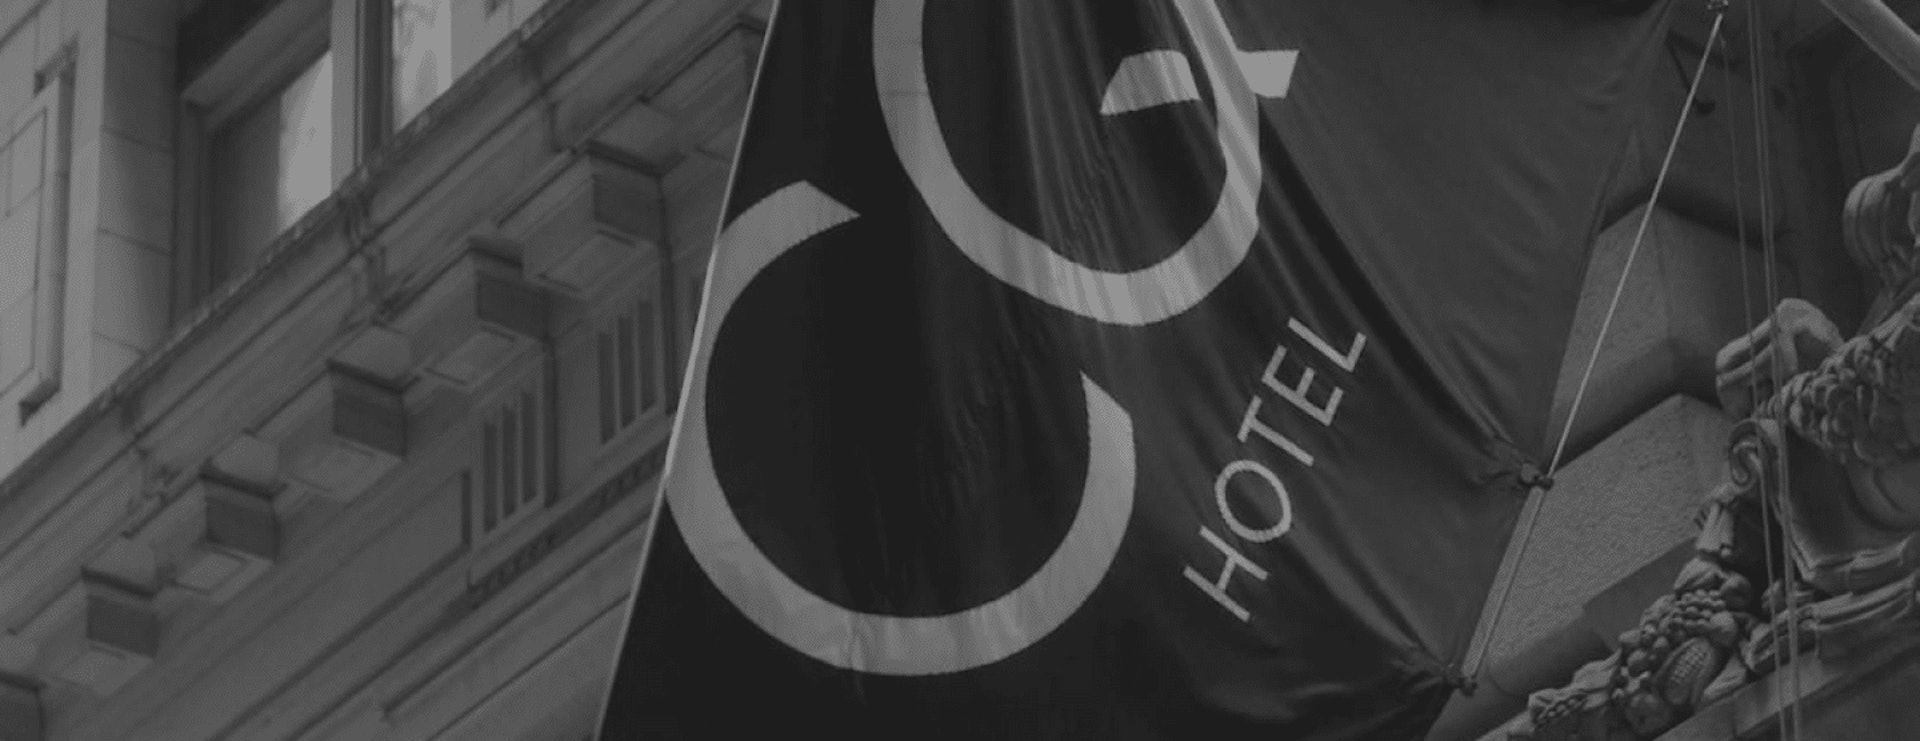 CQ Hotel Flag